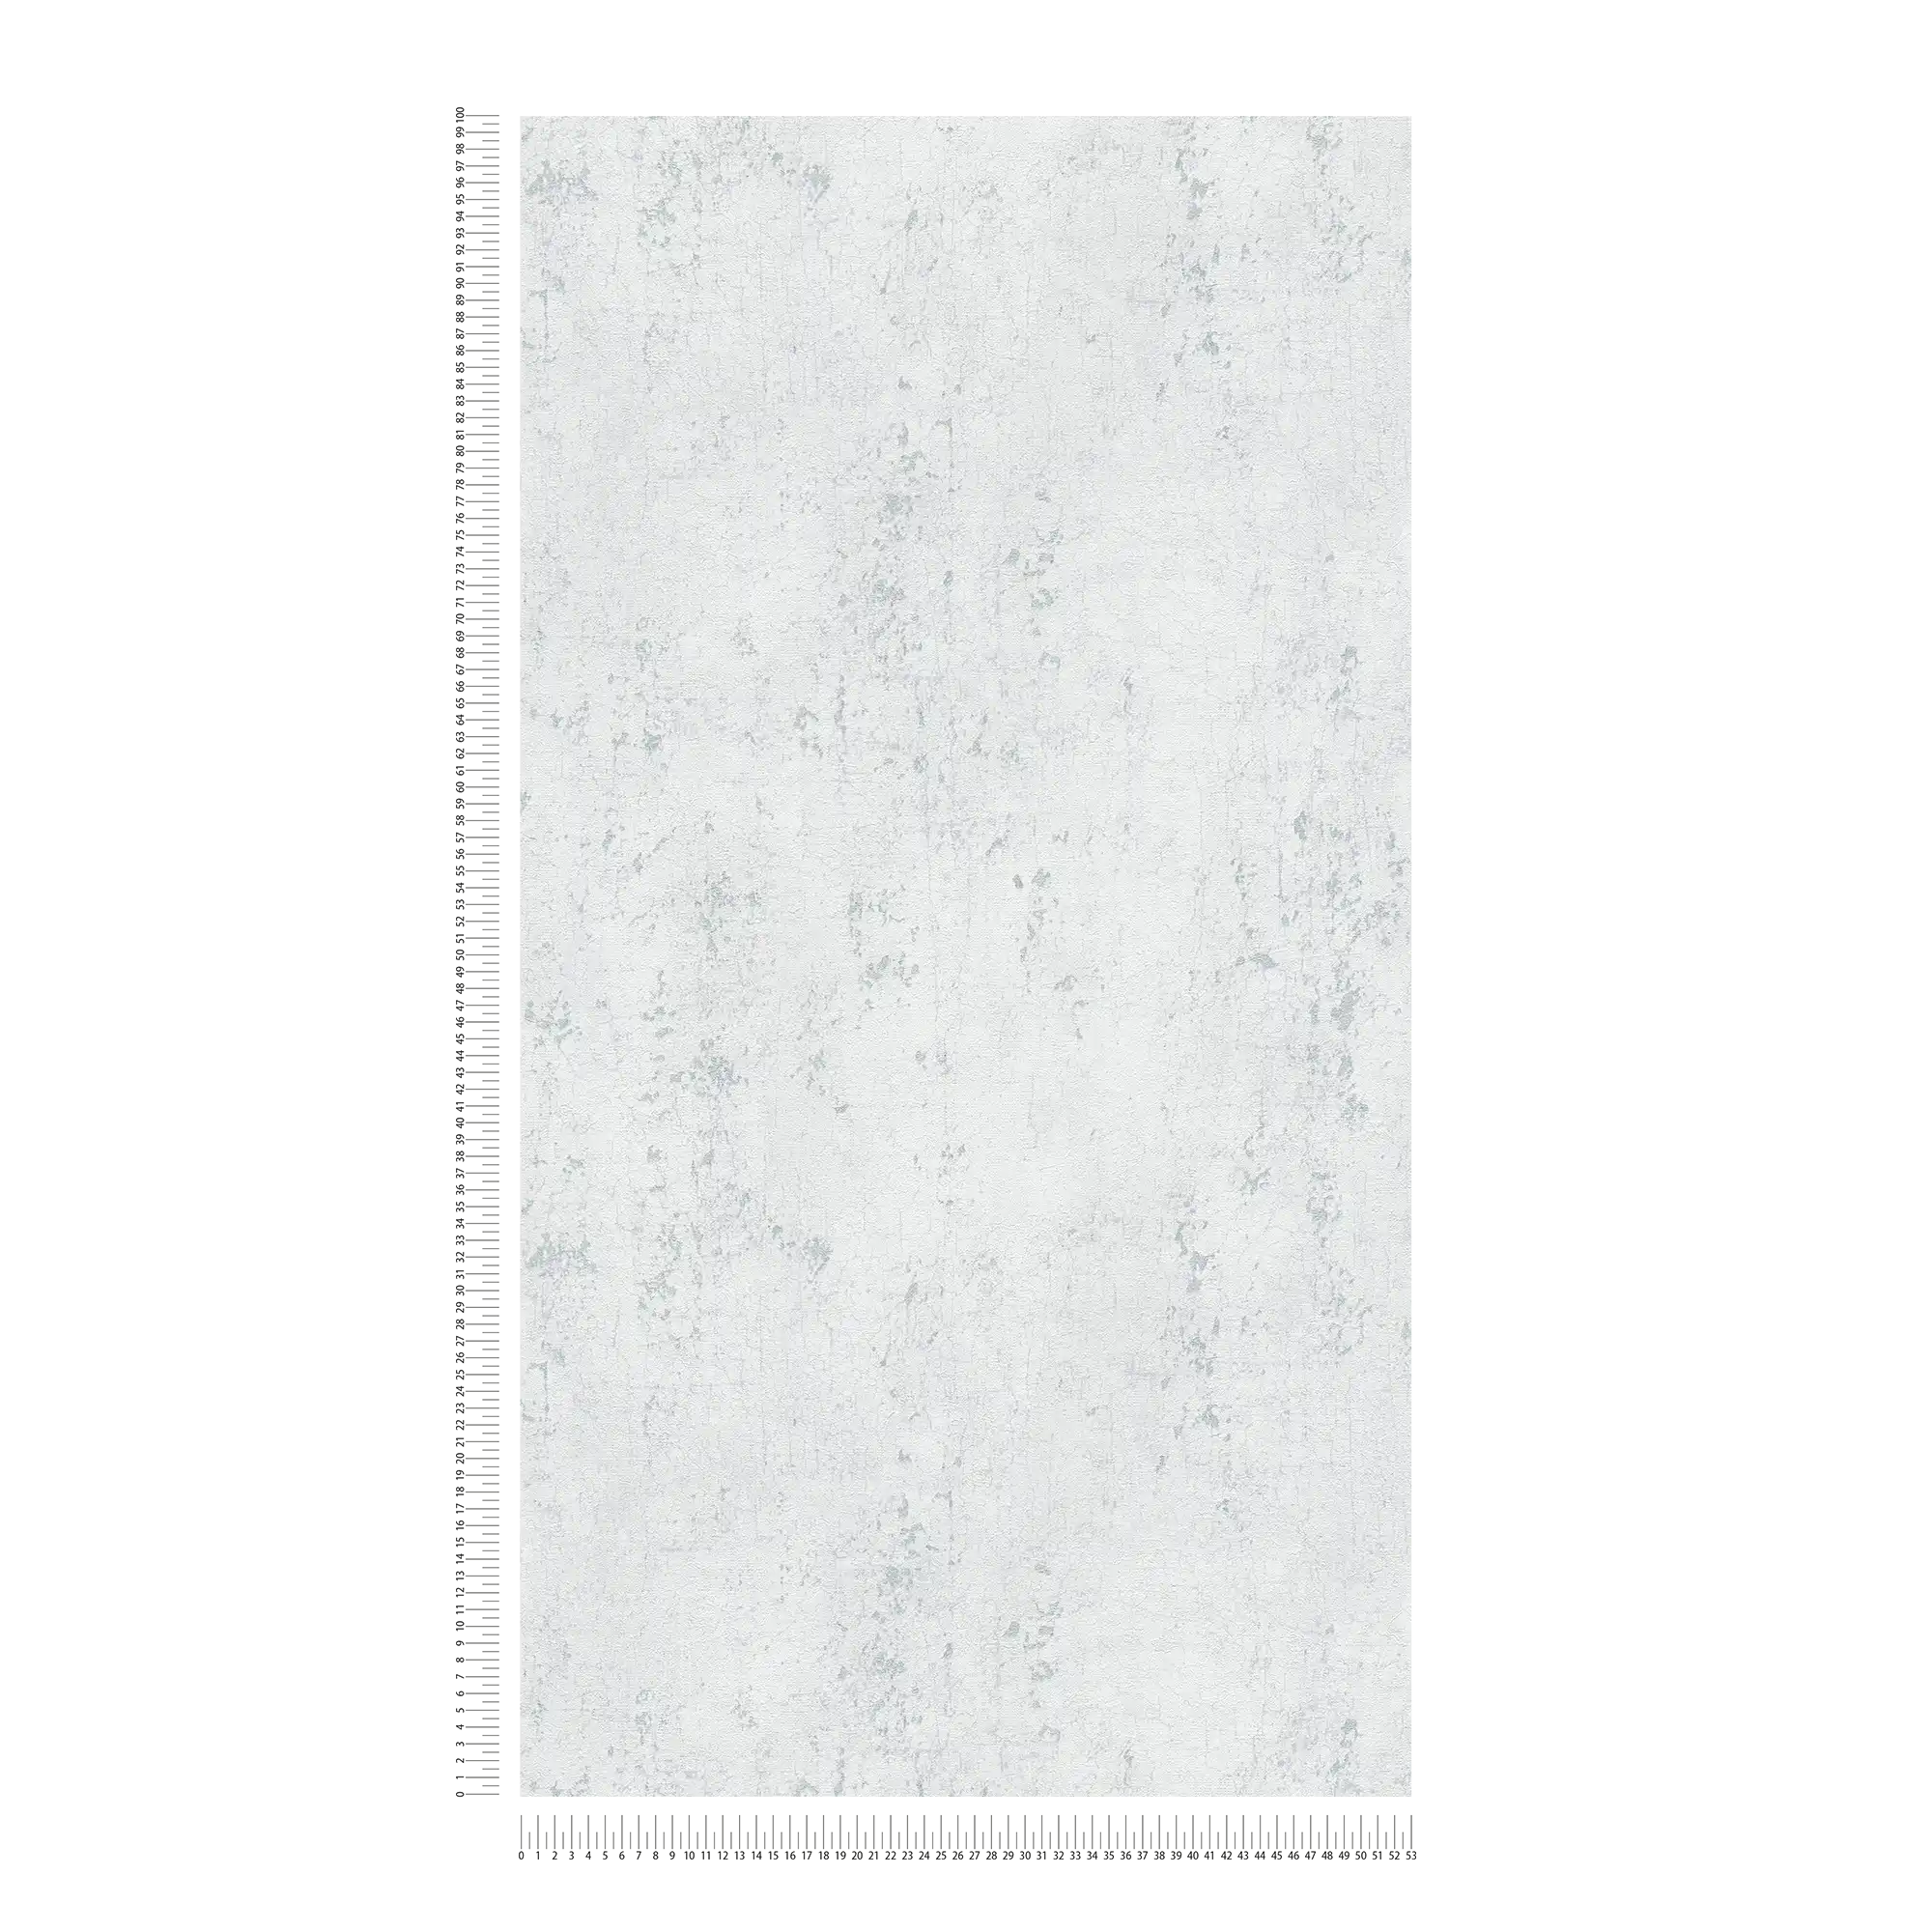             Putzoptik Tapete Hellgrau mit Silber Krakelee – Grau, Metallic, Weiß
        